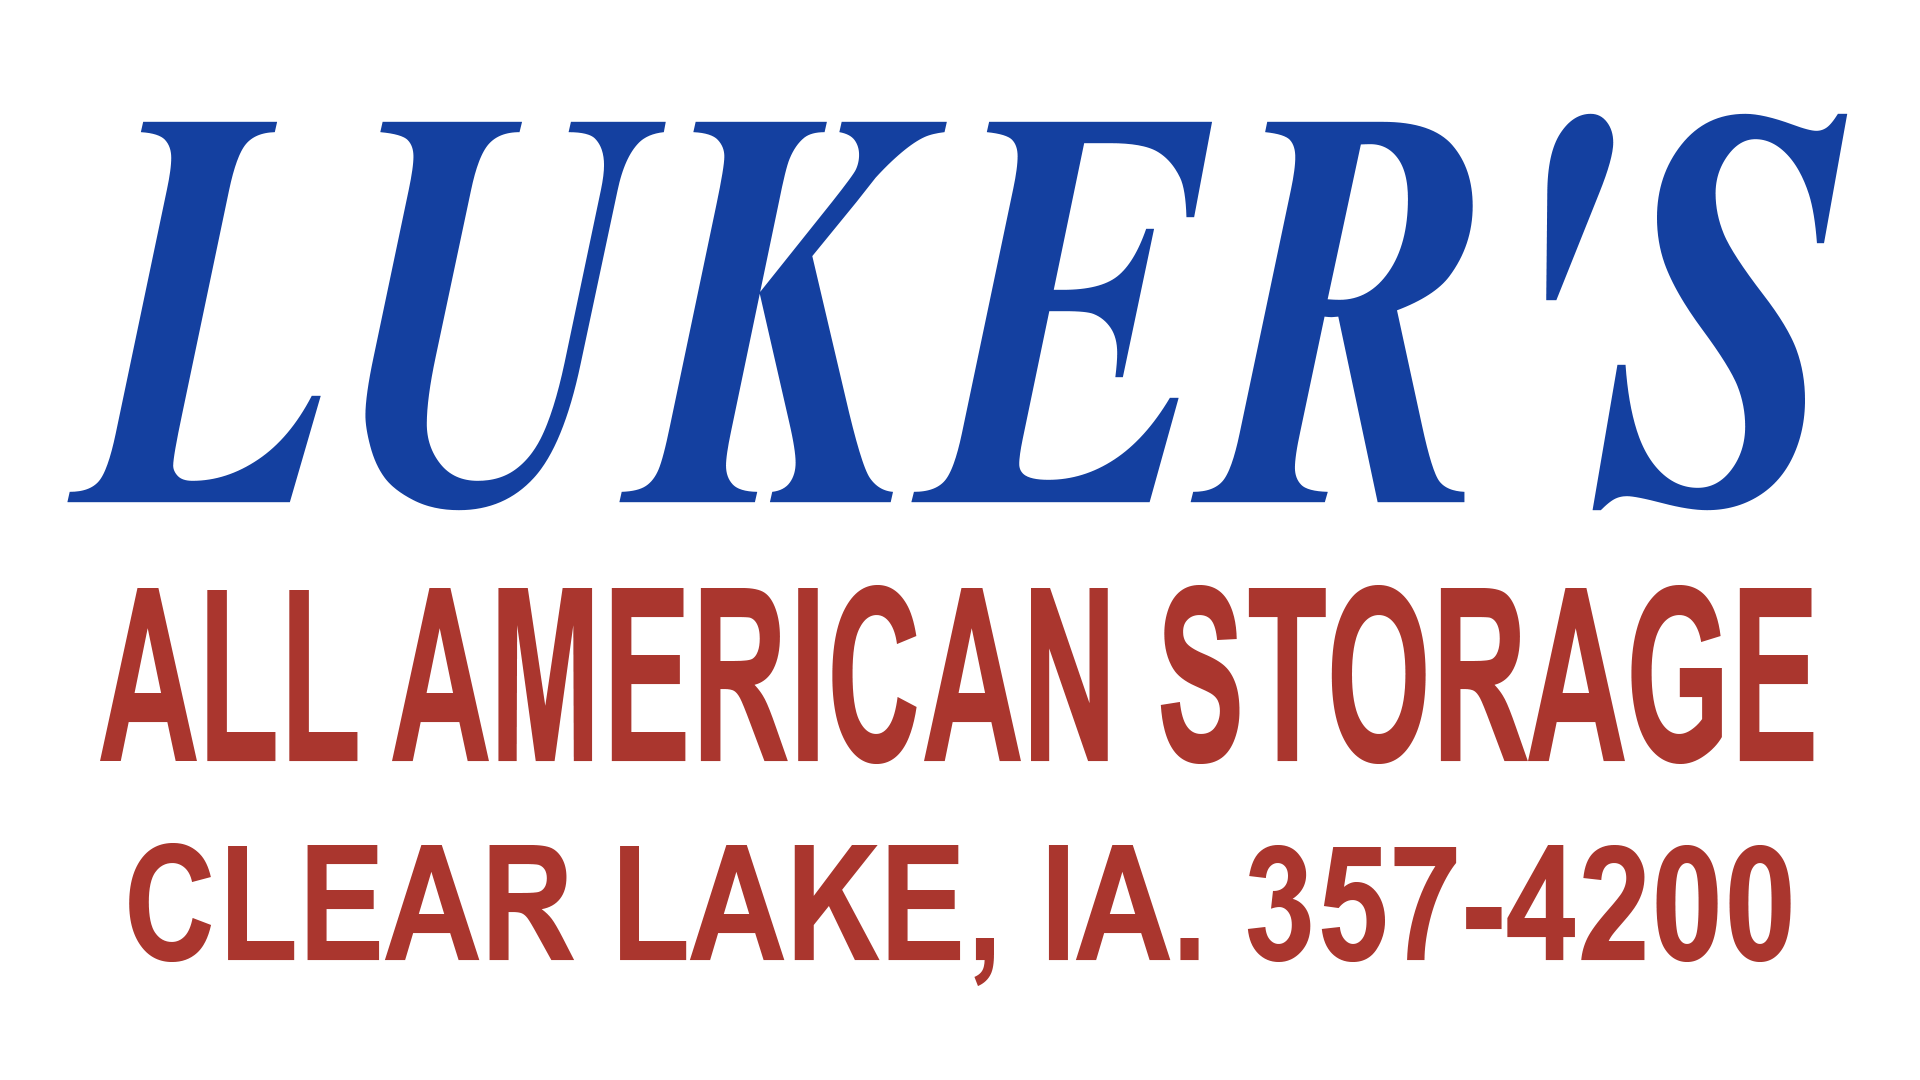 Luker's All American Storage